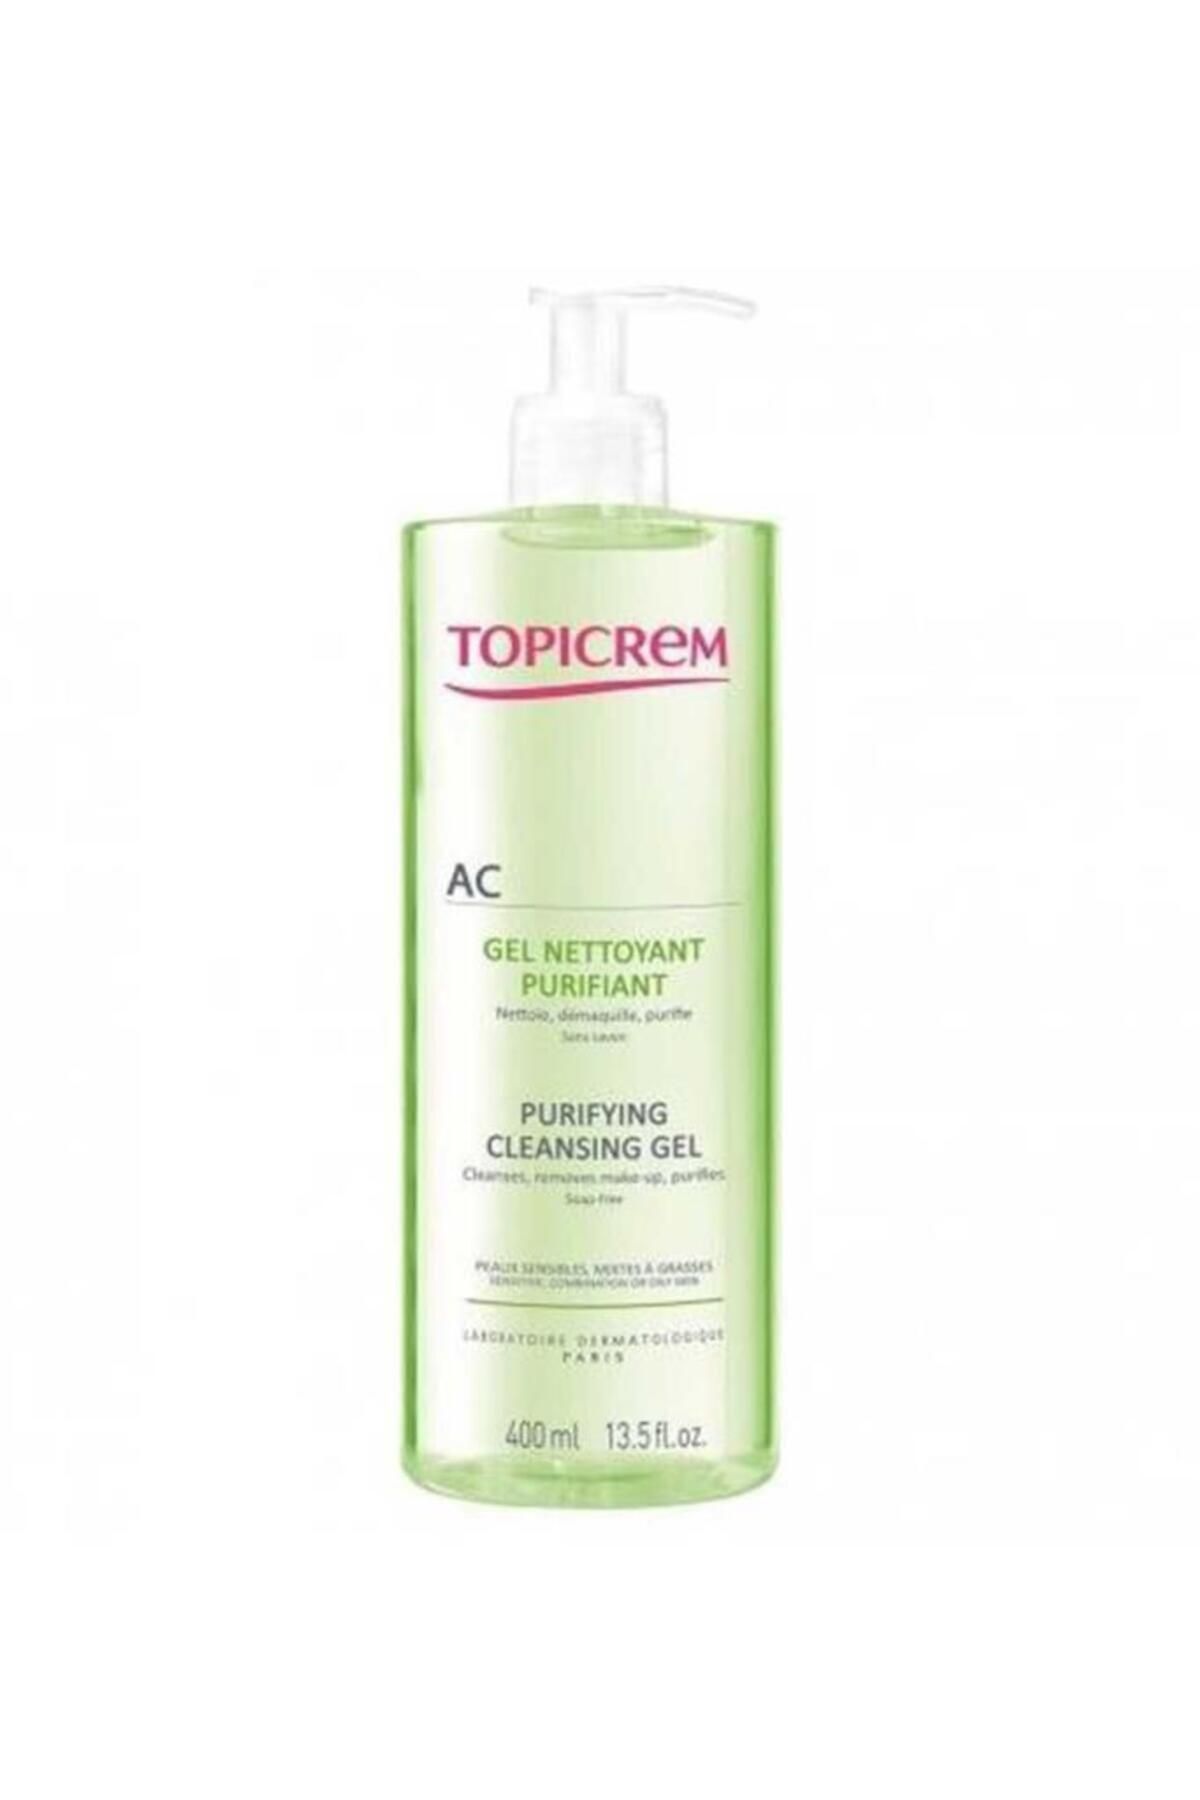 Topicrem Ac Purifying Cleansing Gel 400 ml